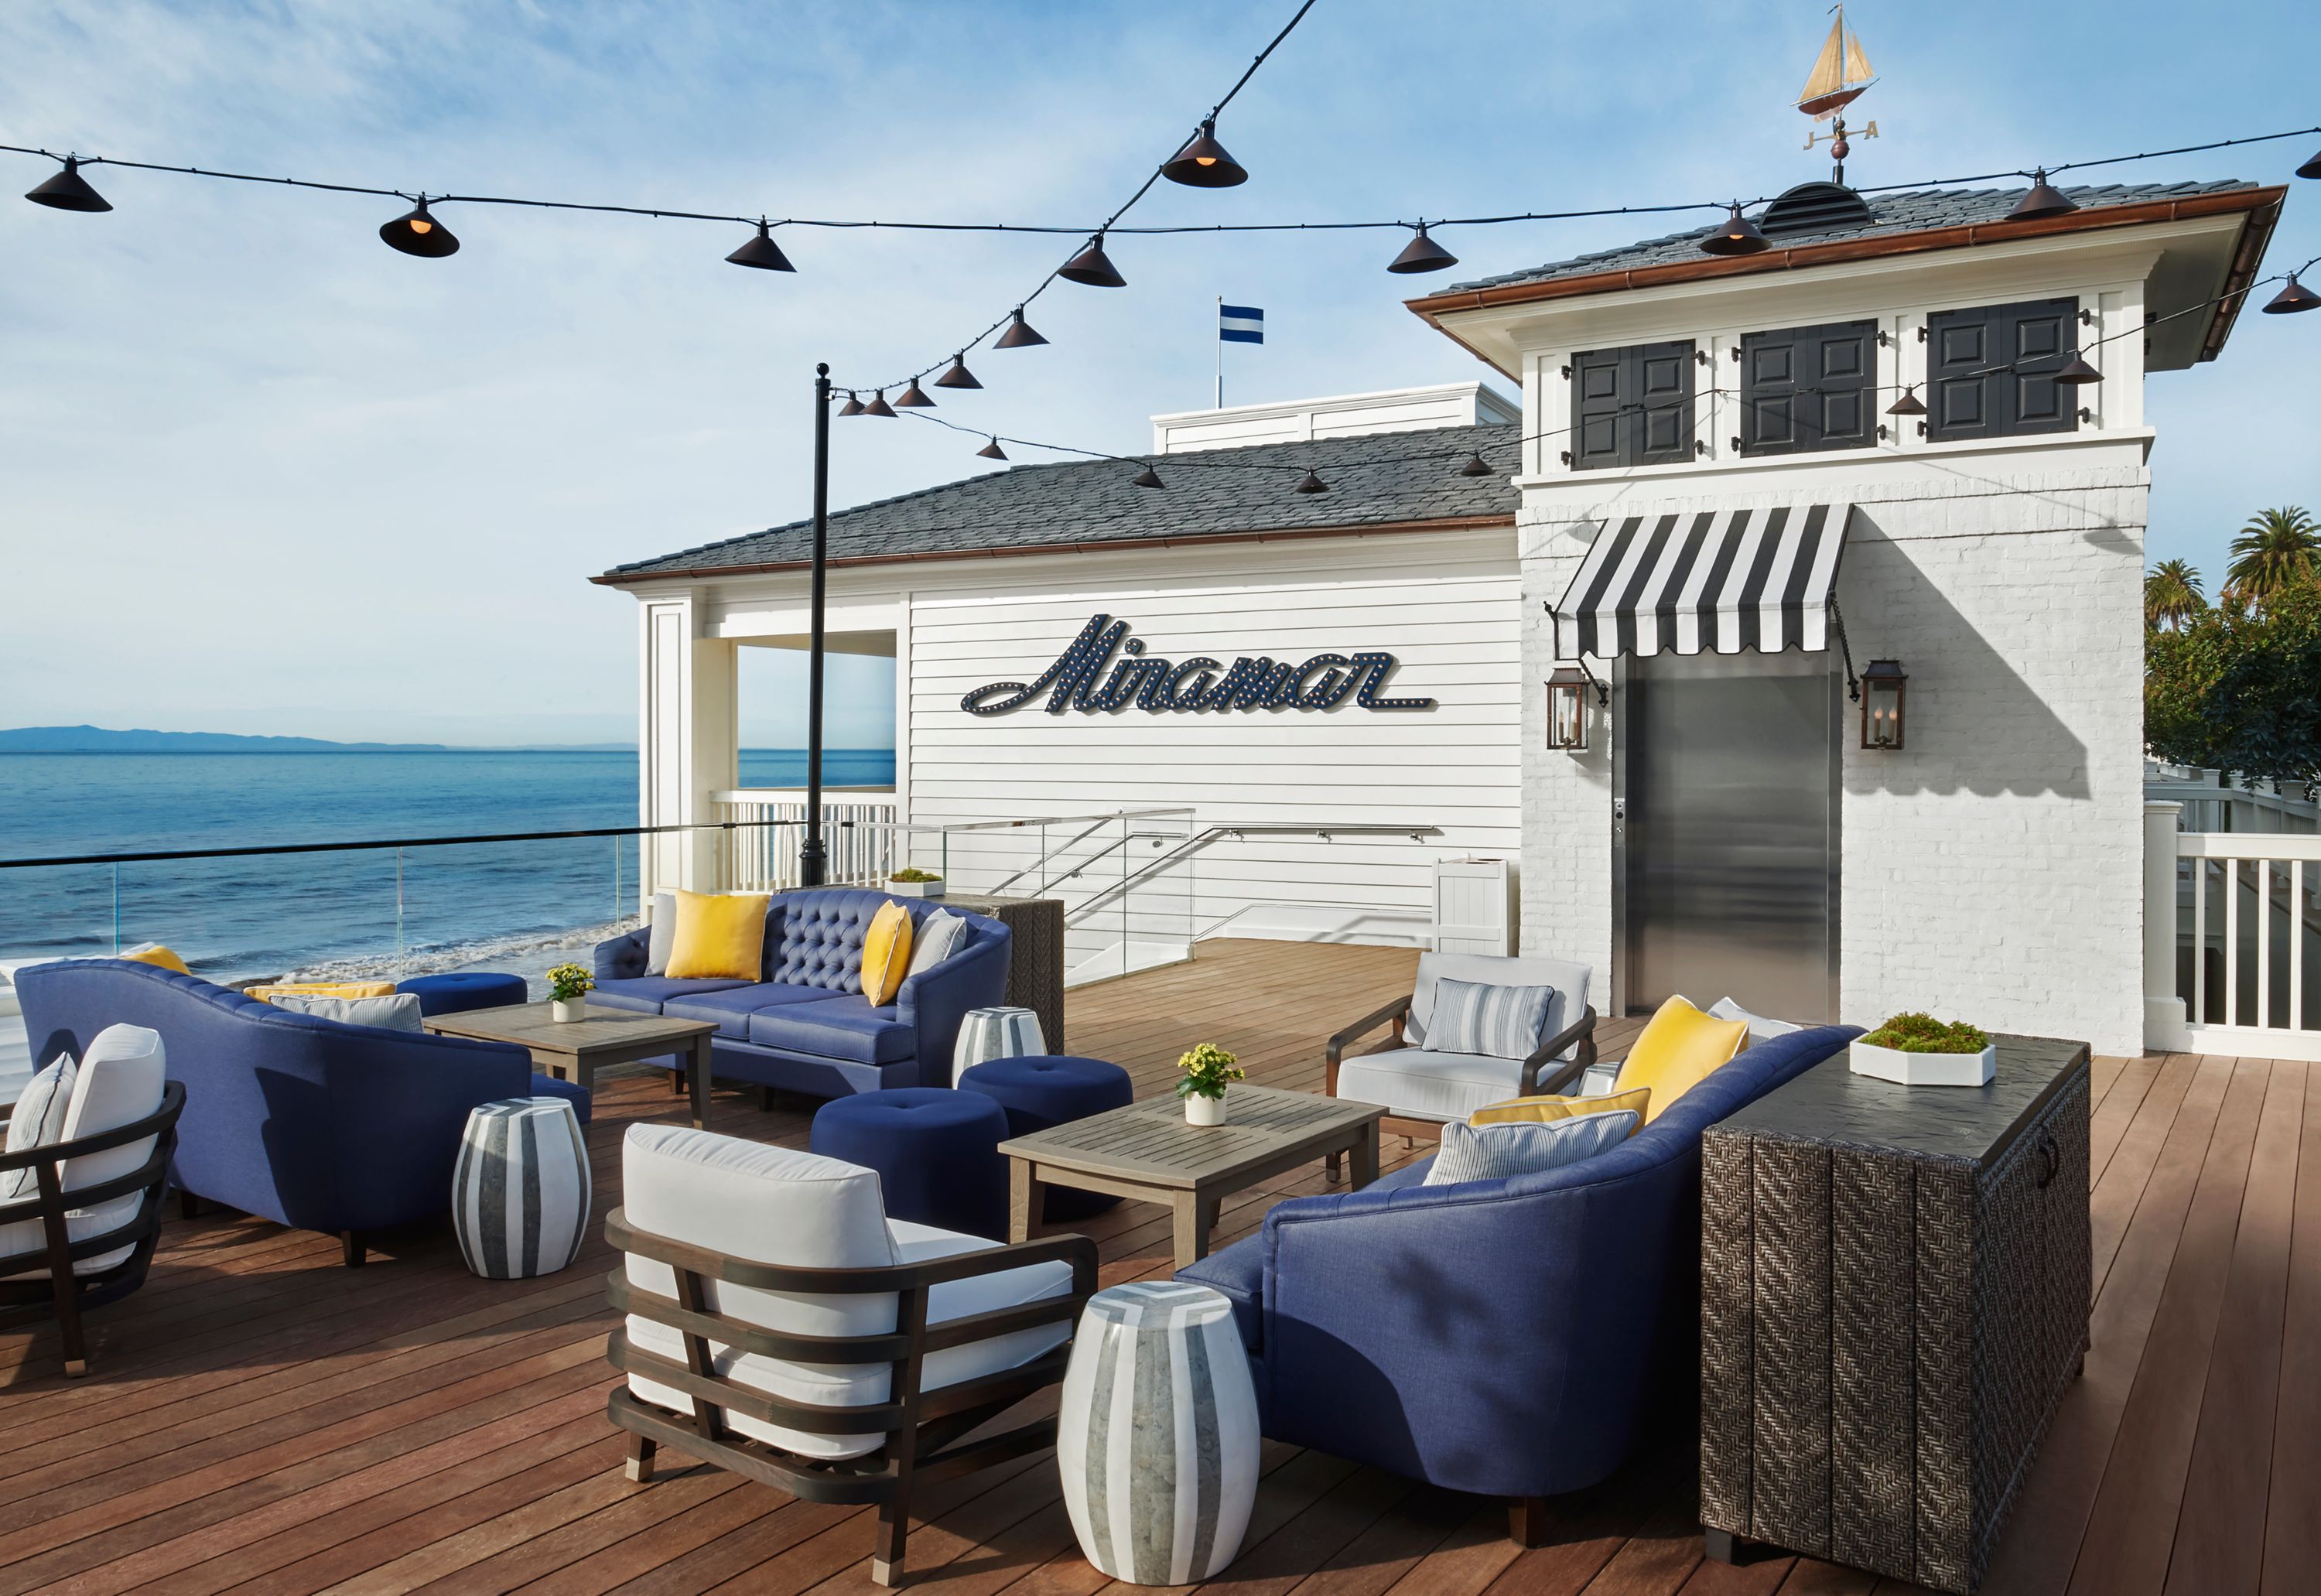 Miramar Beach Bar | Santa Barbara Beachfront Restaurant